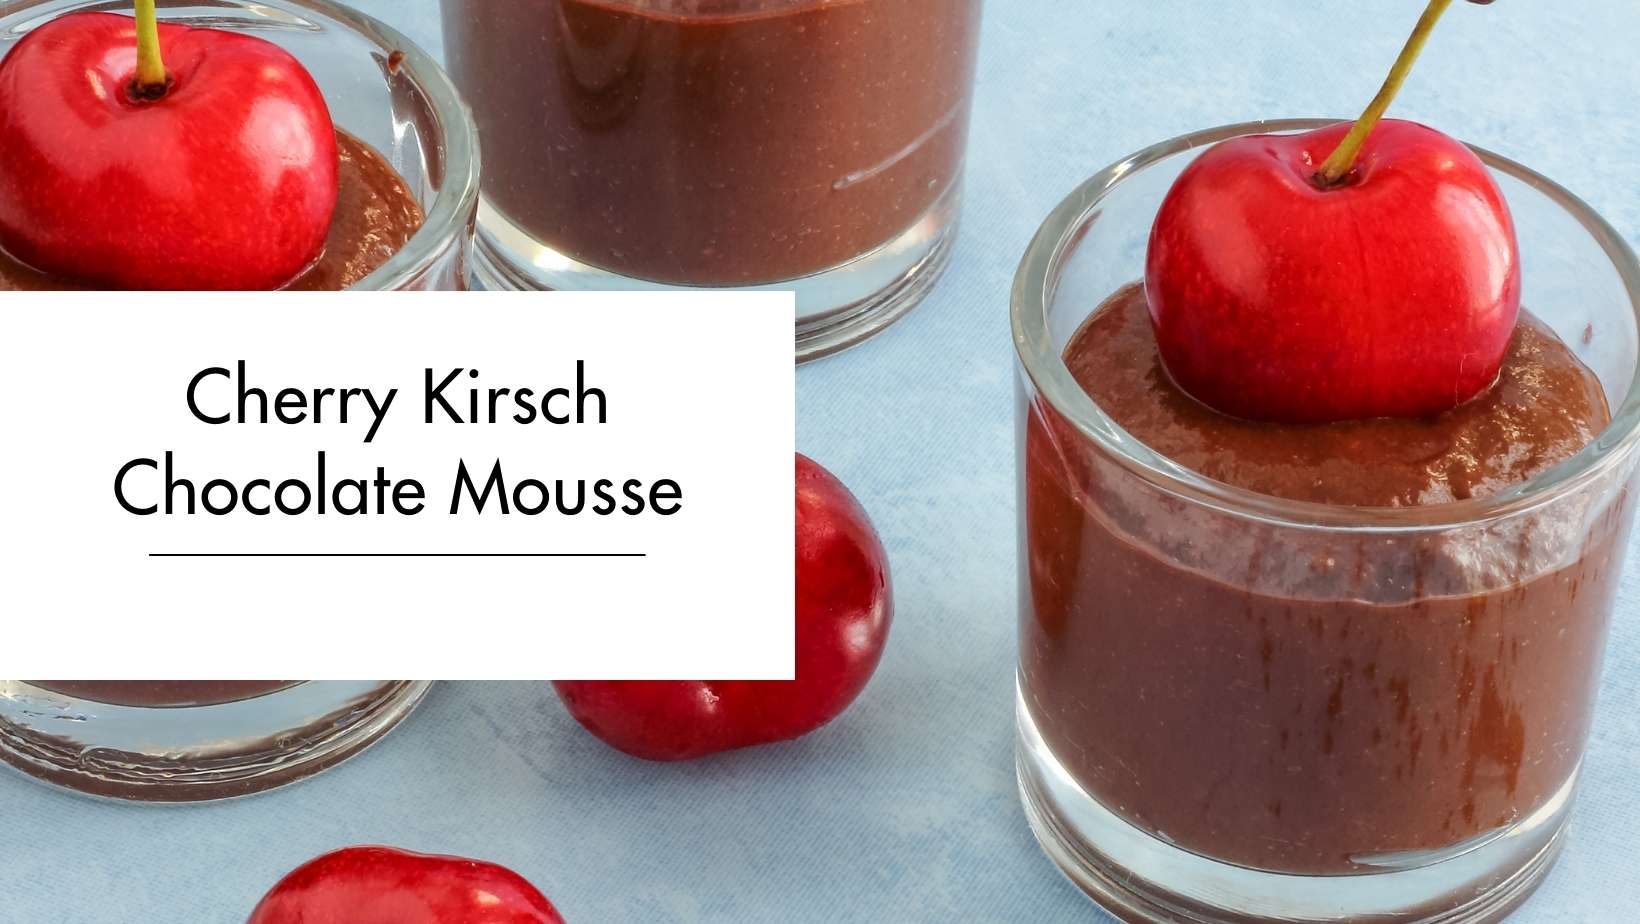 Cherry Kirsch Chocolate Mousse